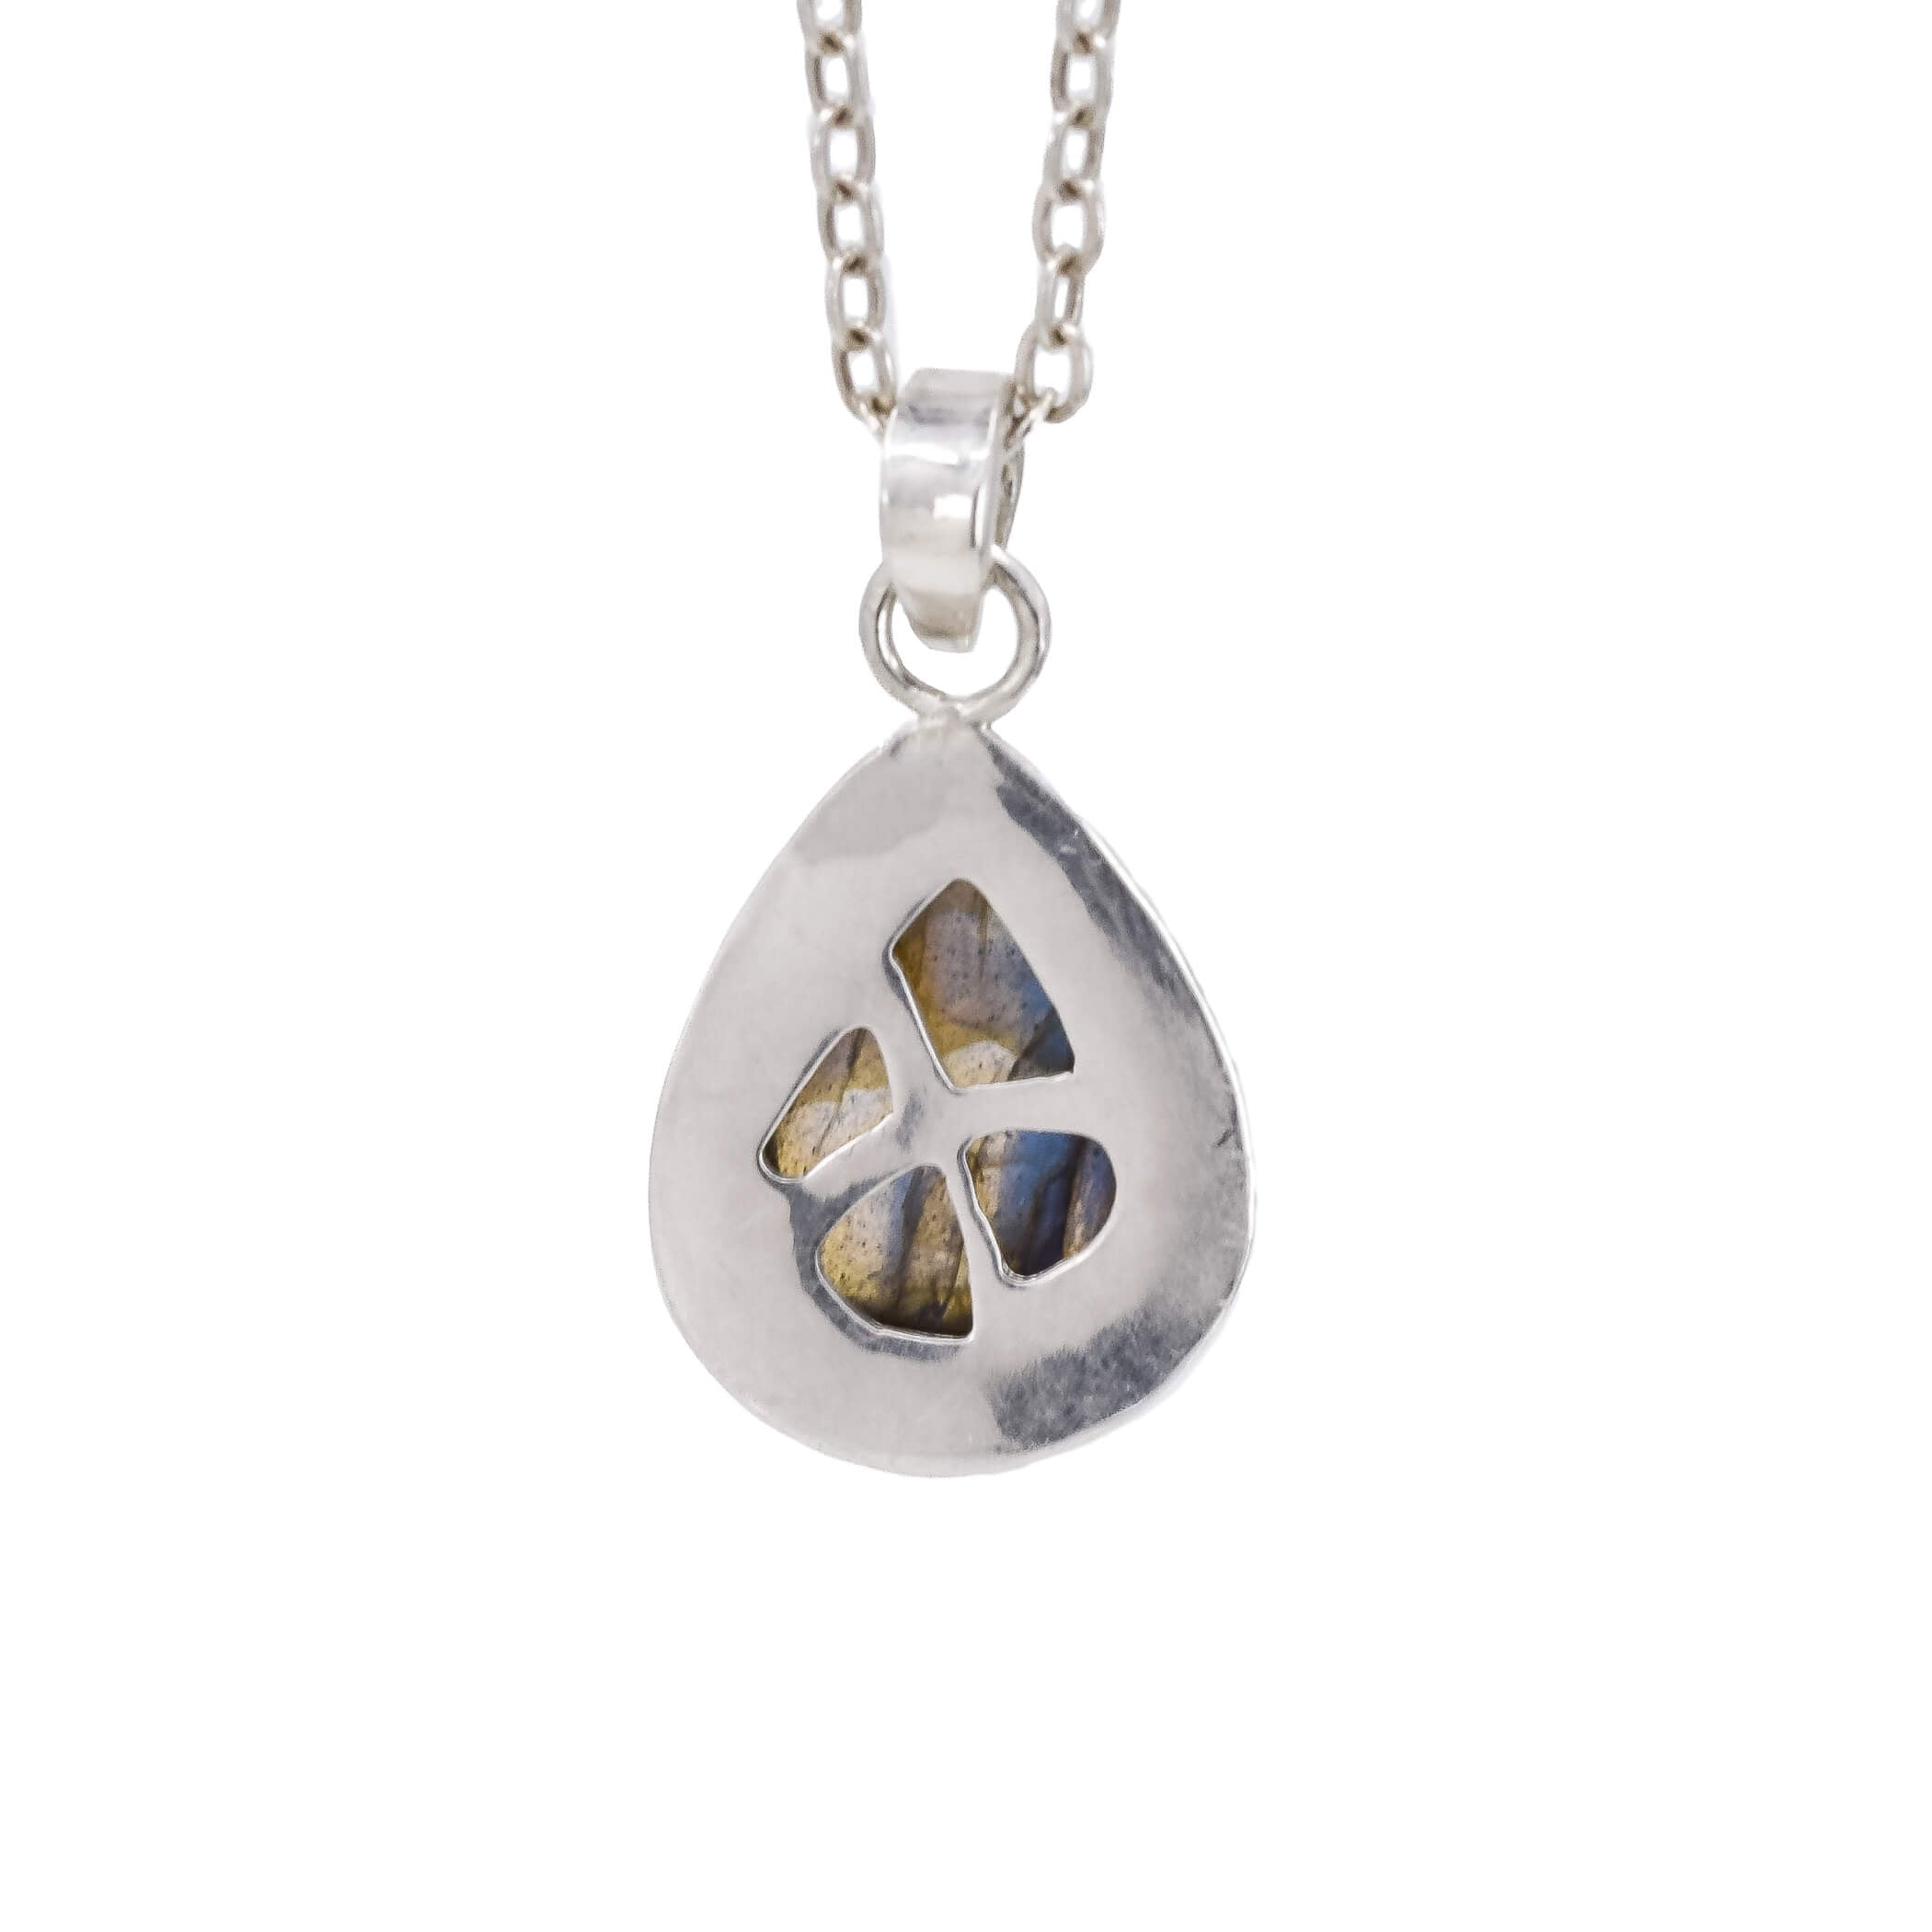 teardrop labradorite pendant necklace in sterling silver back view